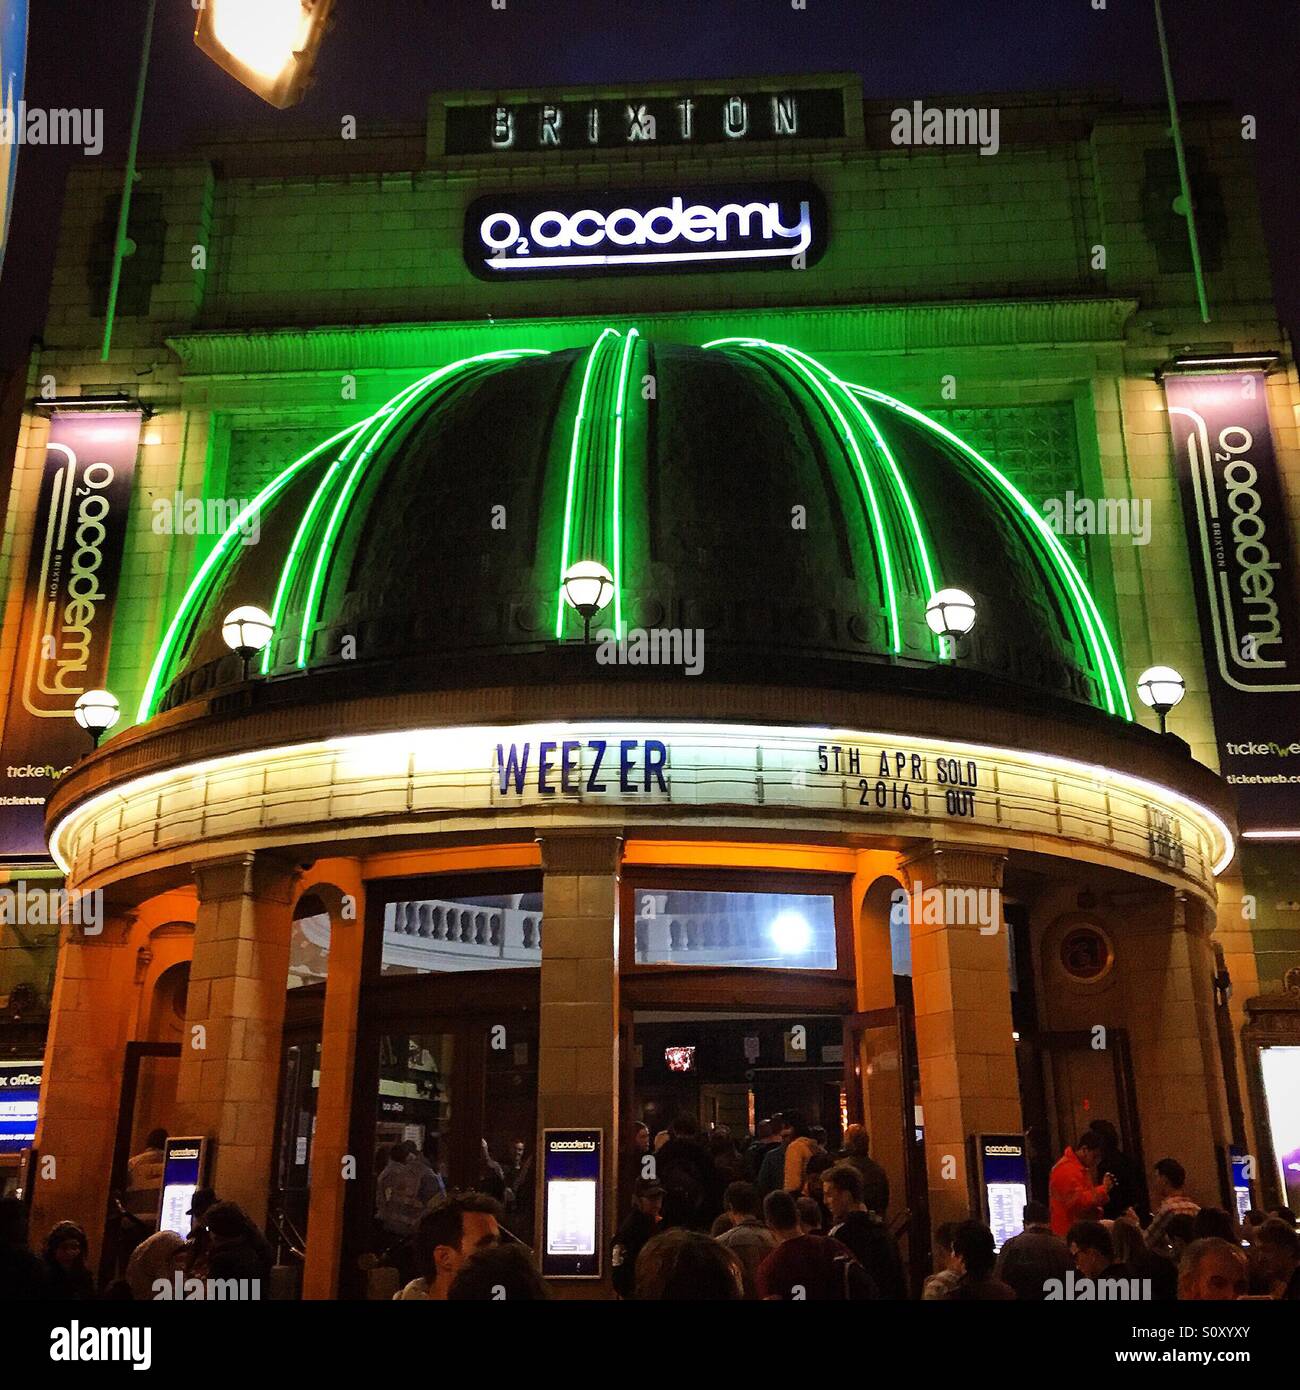 Brixton Academy's billboard : weezer, s'est vendu dehors ! Banque D'Images